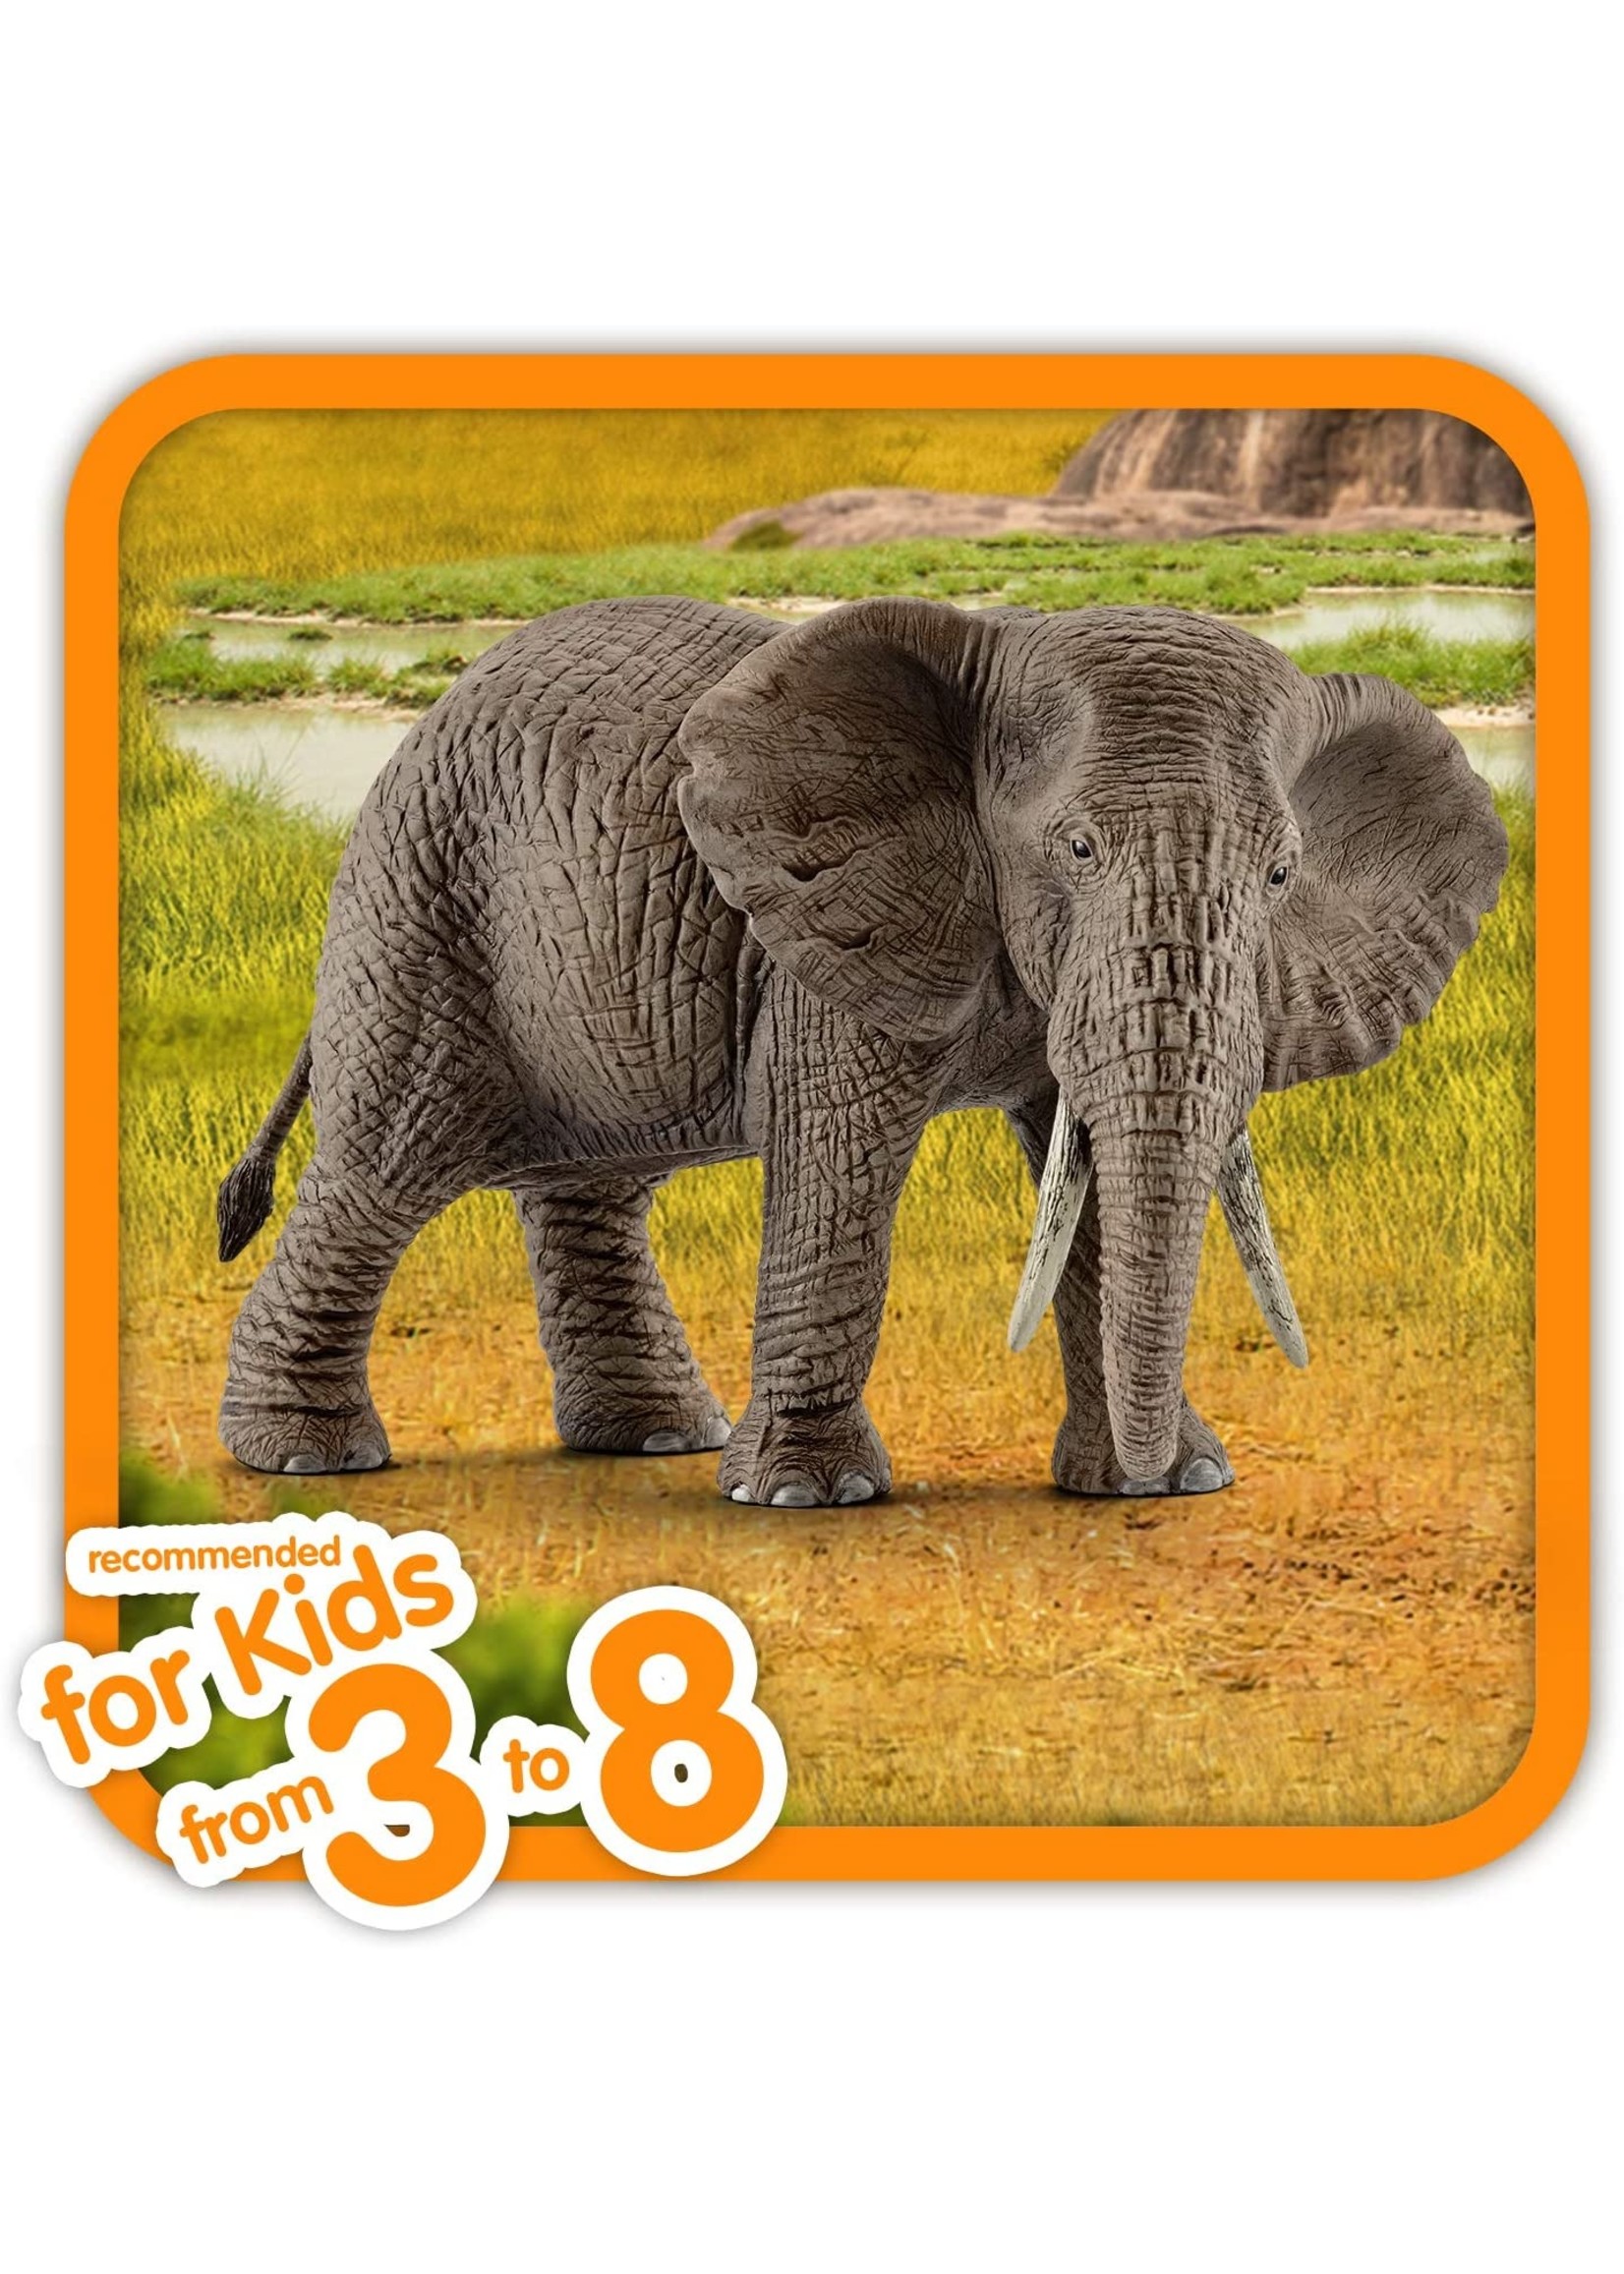 Schleich 14761 - African Elephant Female